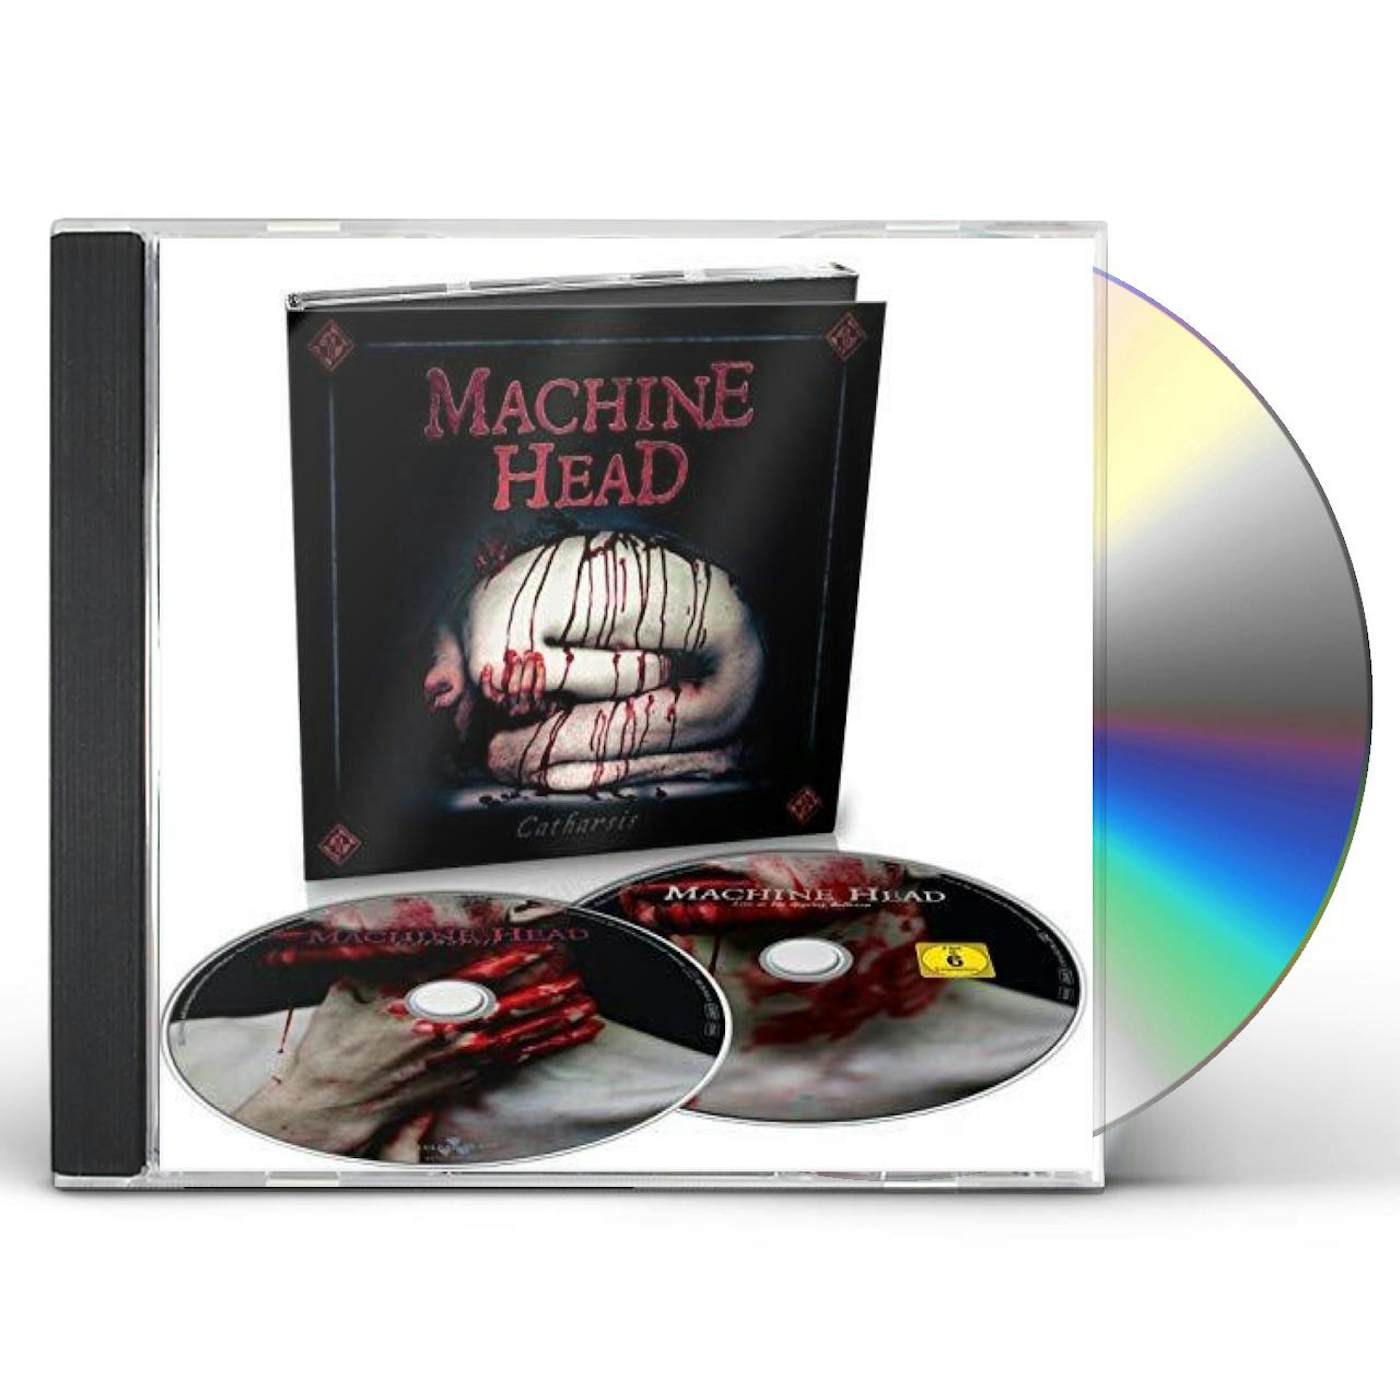 Machine Head CATHARSIS (CD/DVD) CD